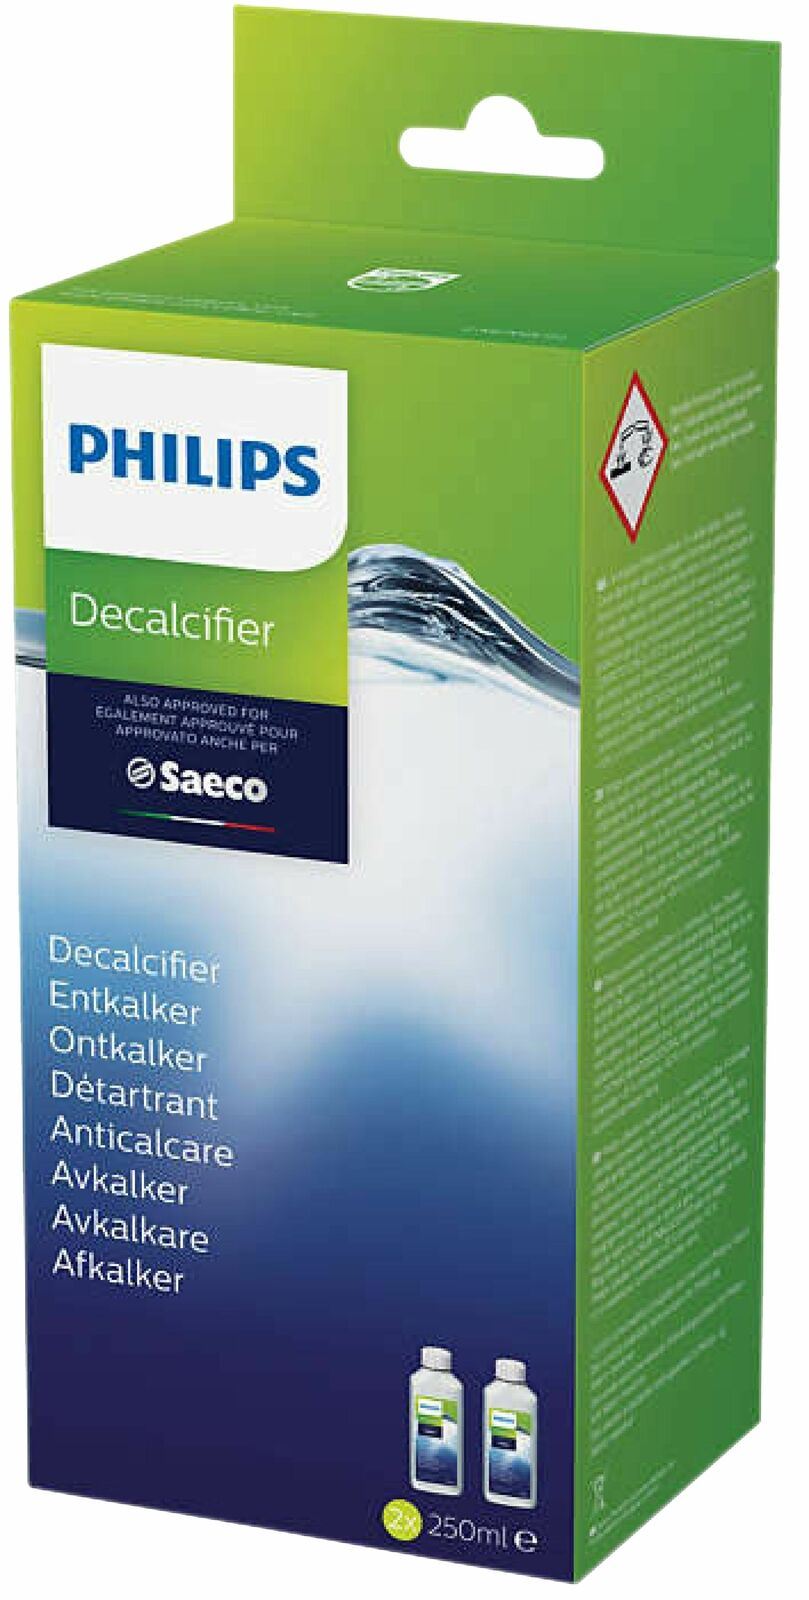 Philips - Senseo Descaler (CA6520 00) - 250ml